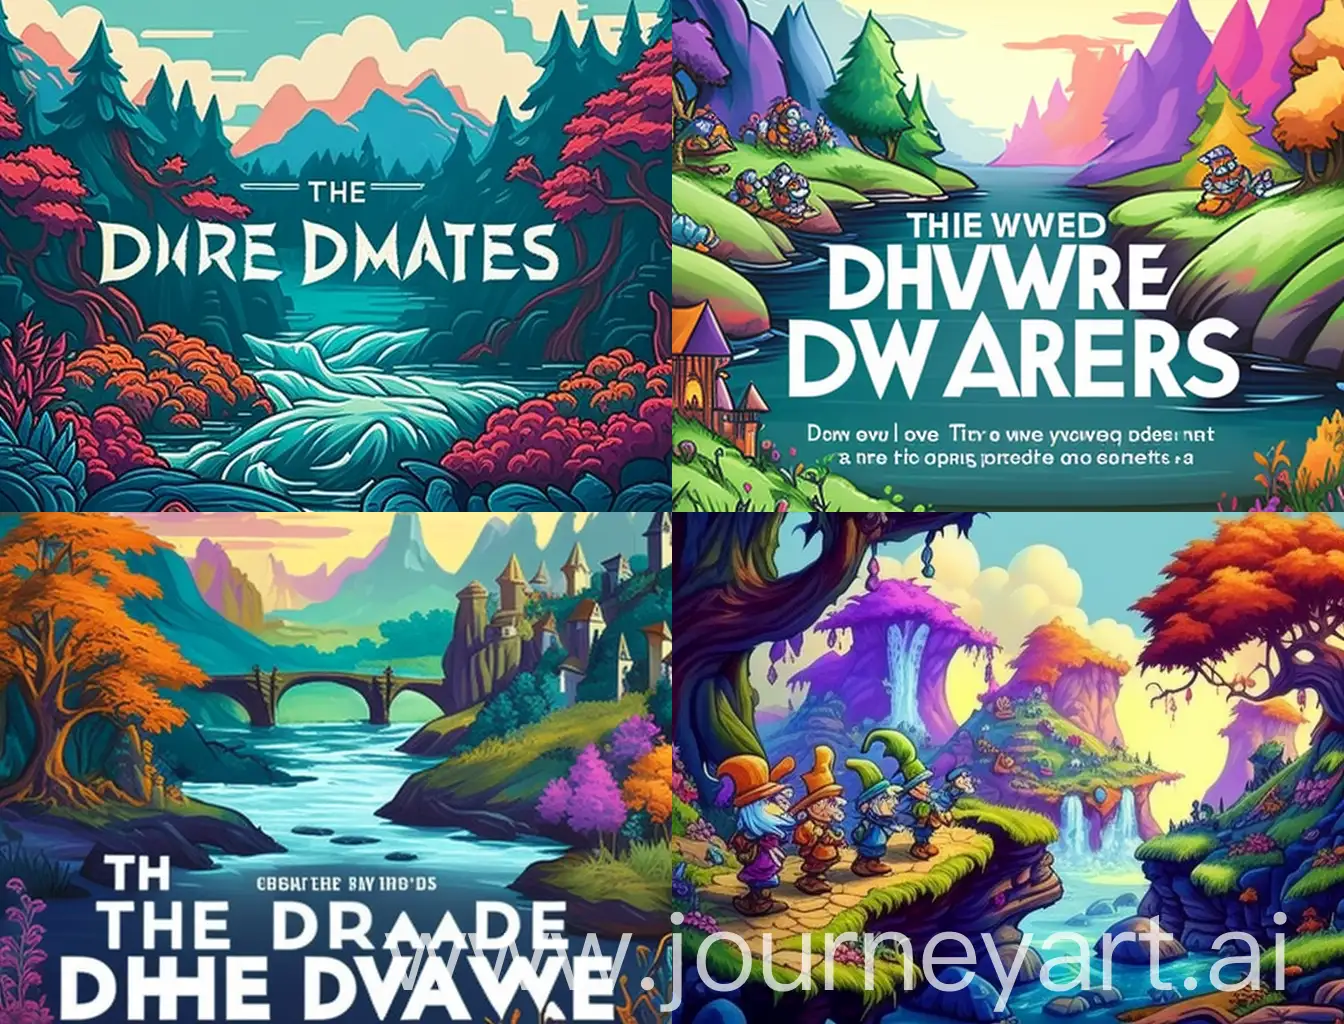 Enchanting-Dwarfs-Engaged-in-Animated-Debate-Amidst-Colorful-Fantasy-Landscape